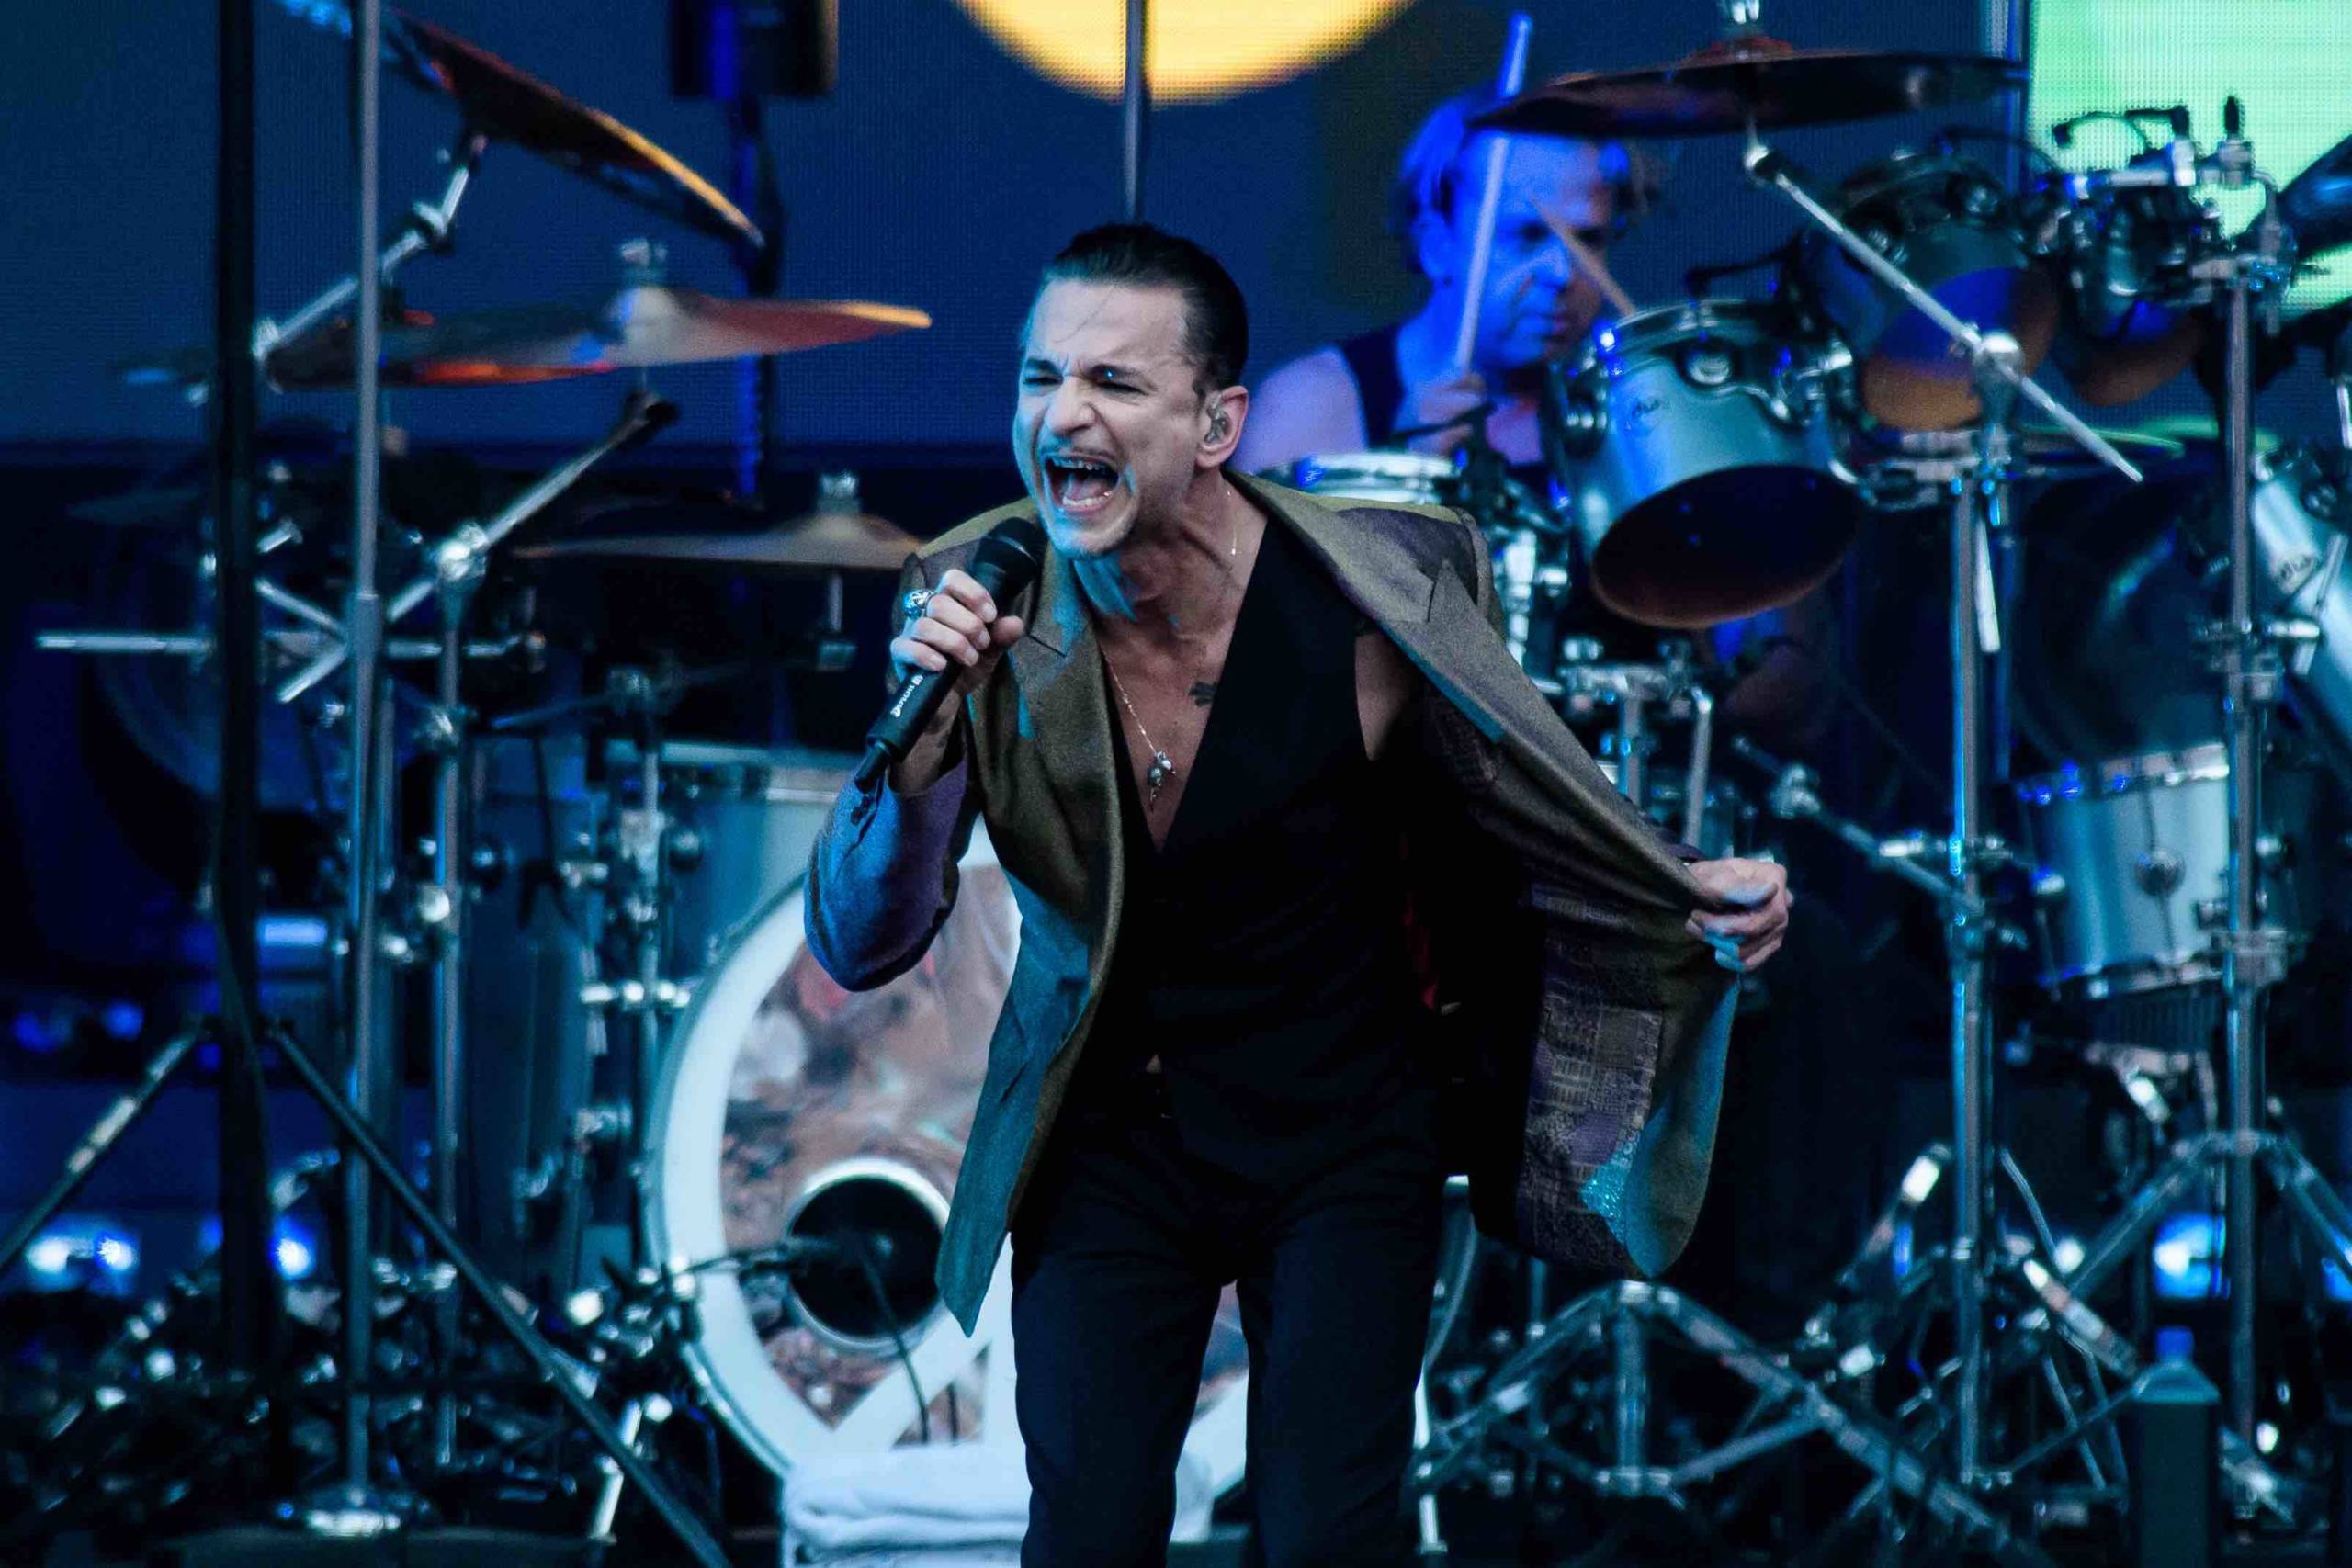 Depeche Mode live